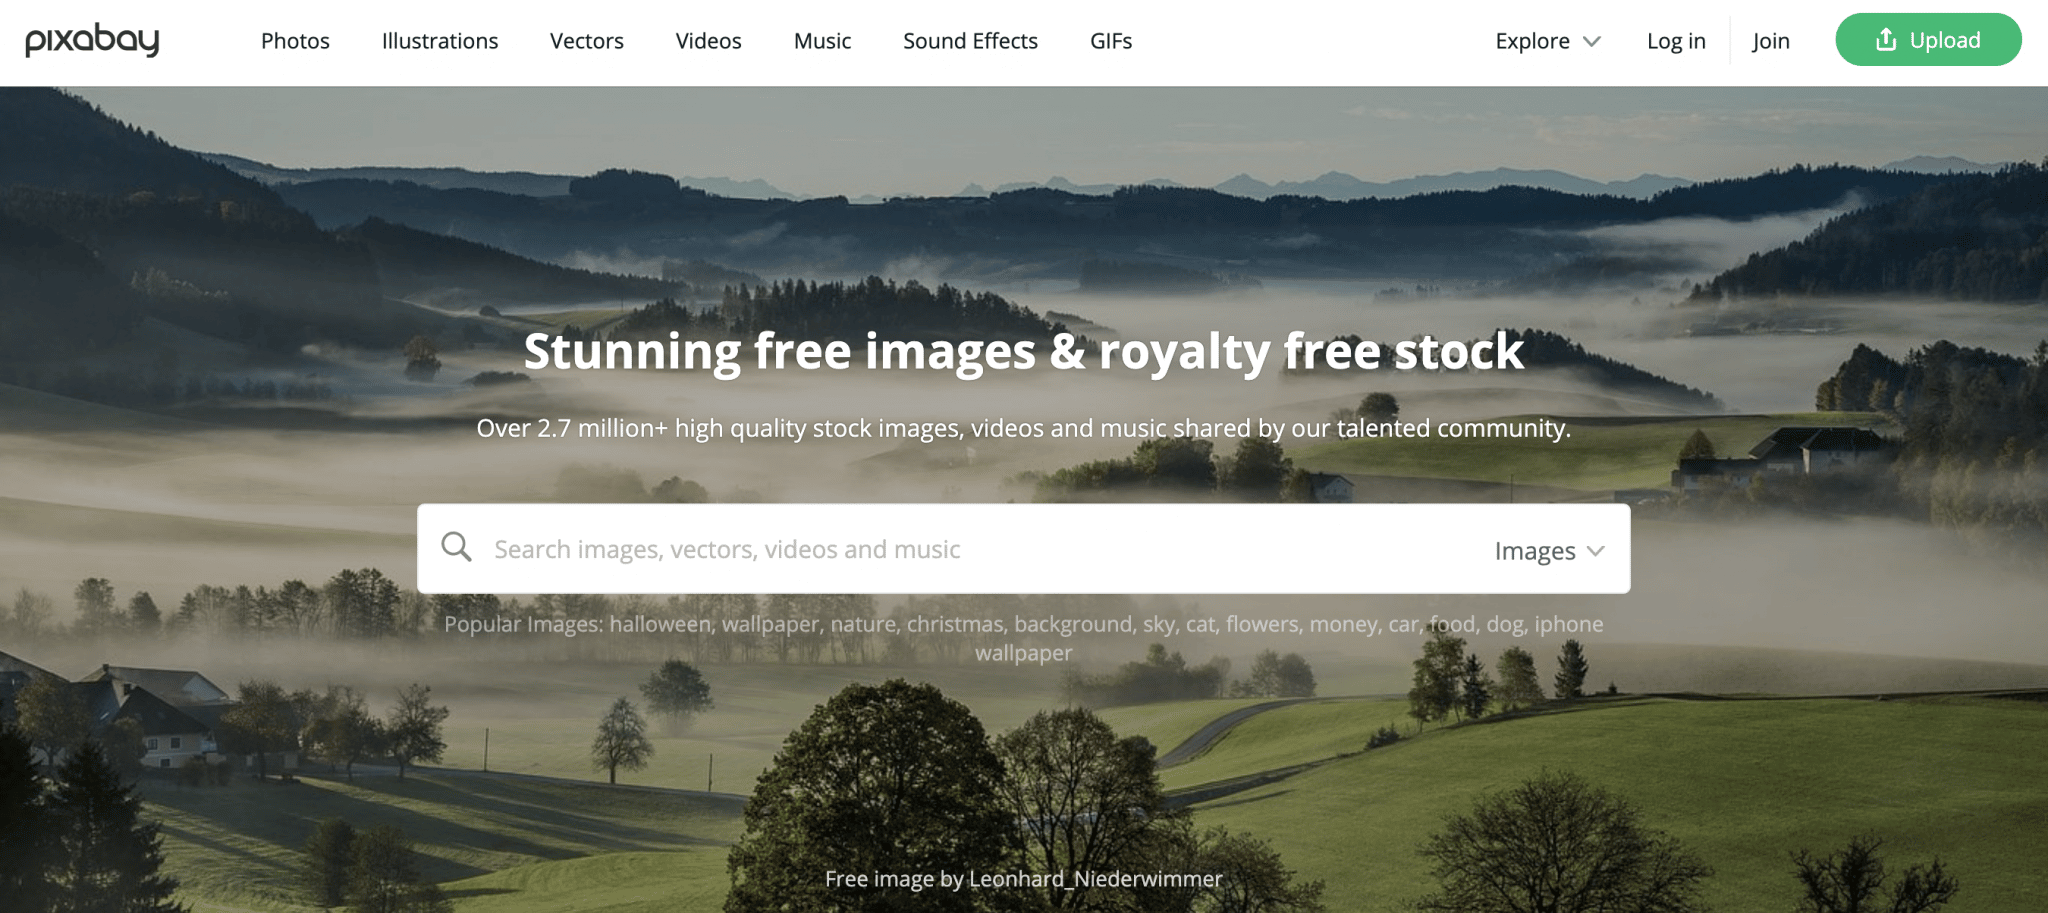 Pixabay homepage.